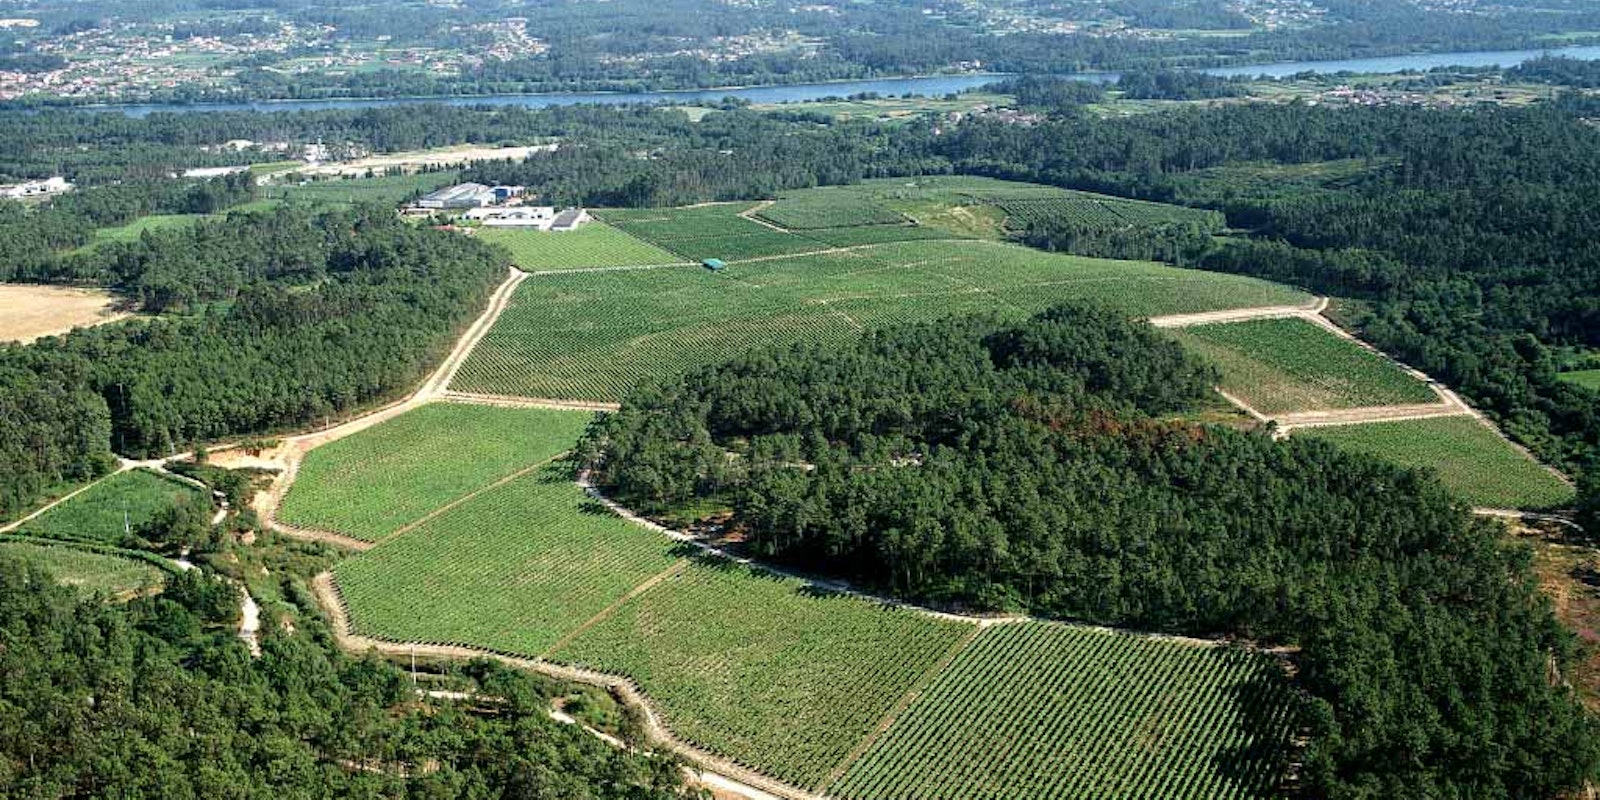 Rias Baixas vineyard